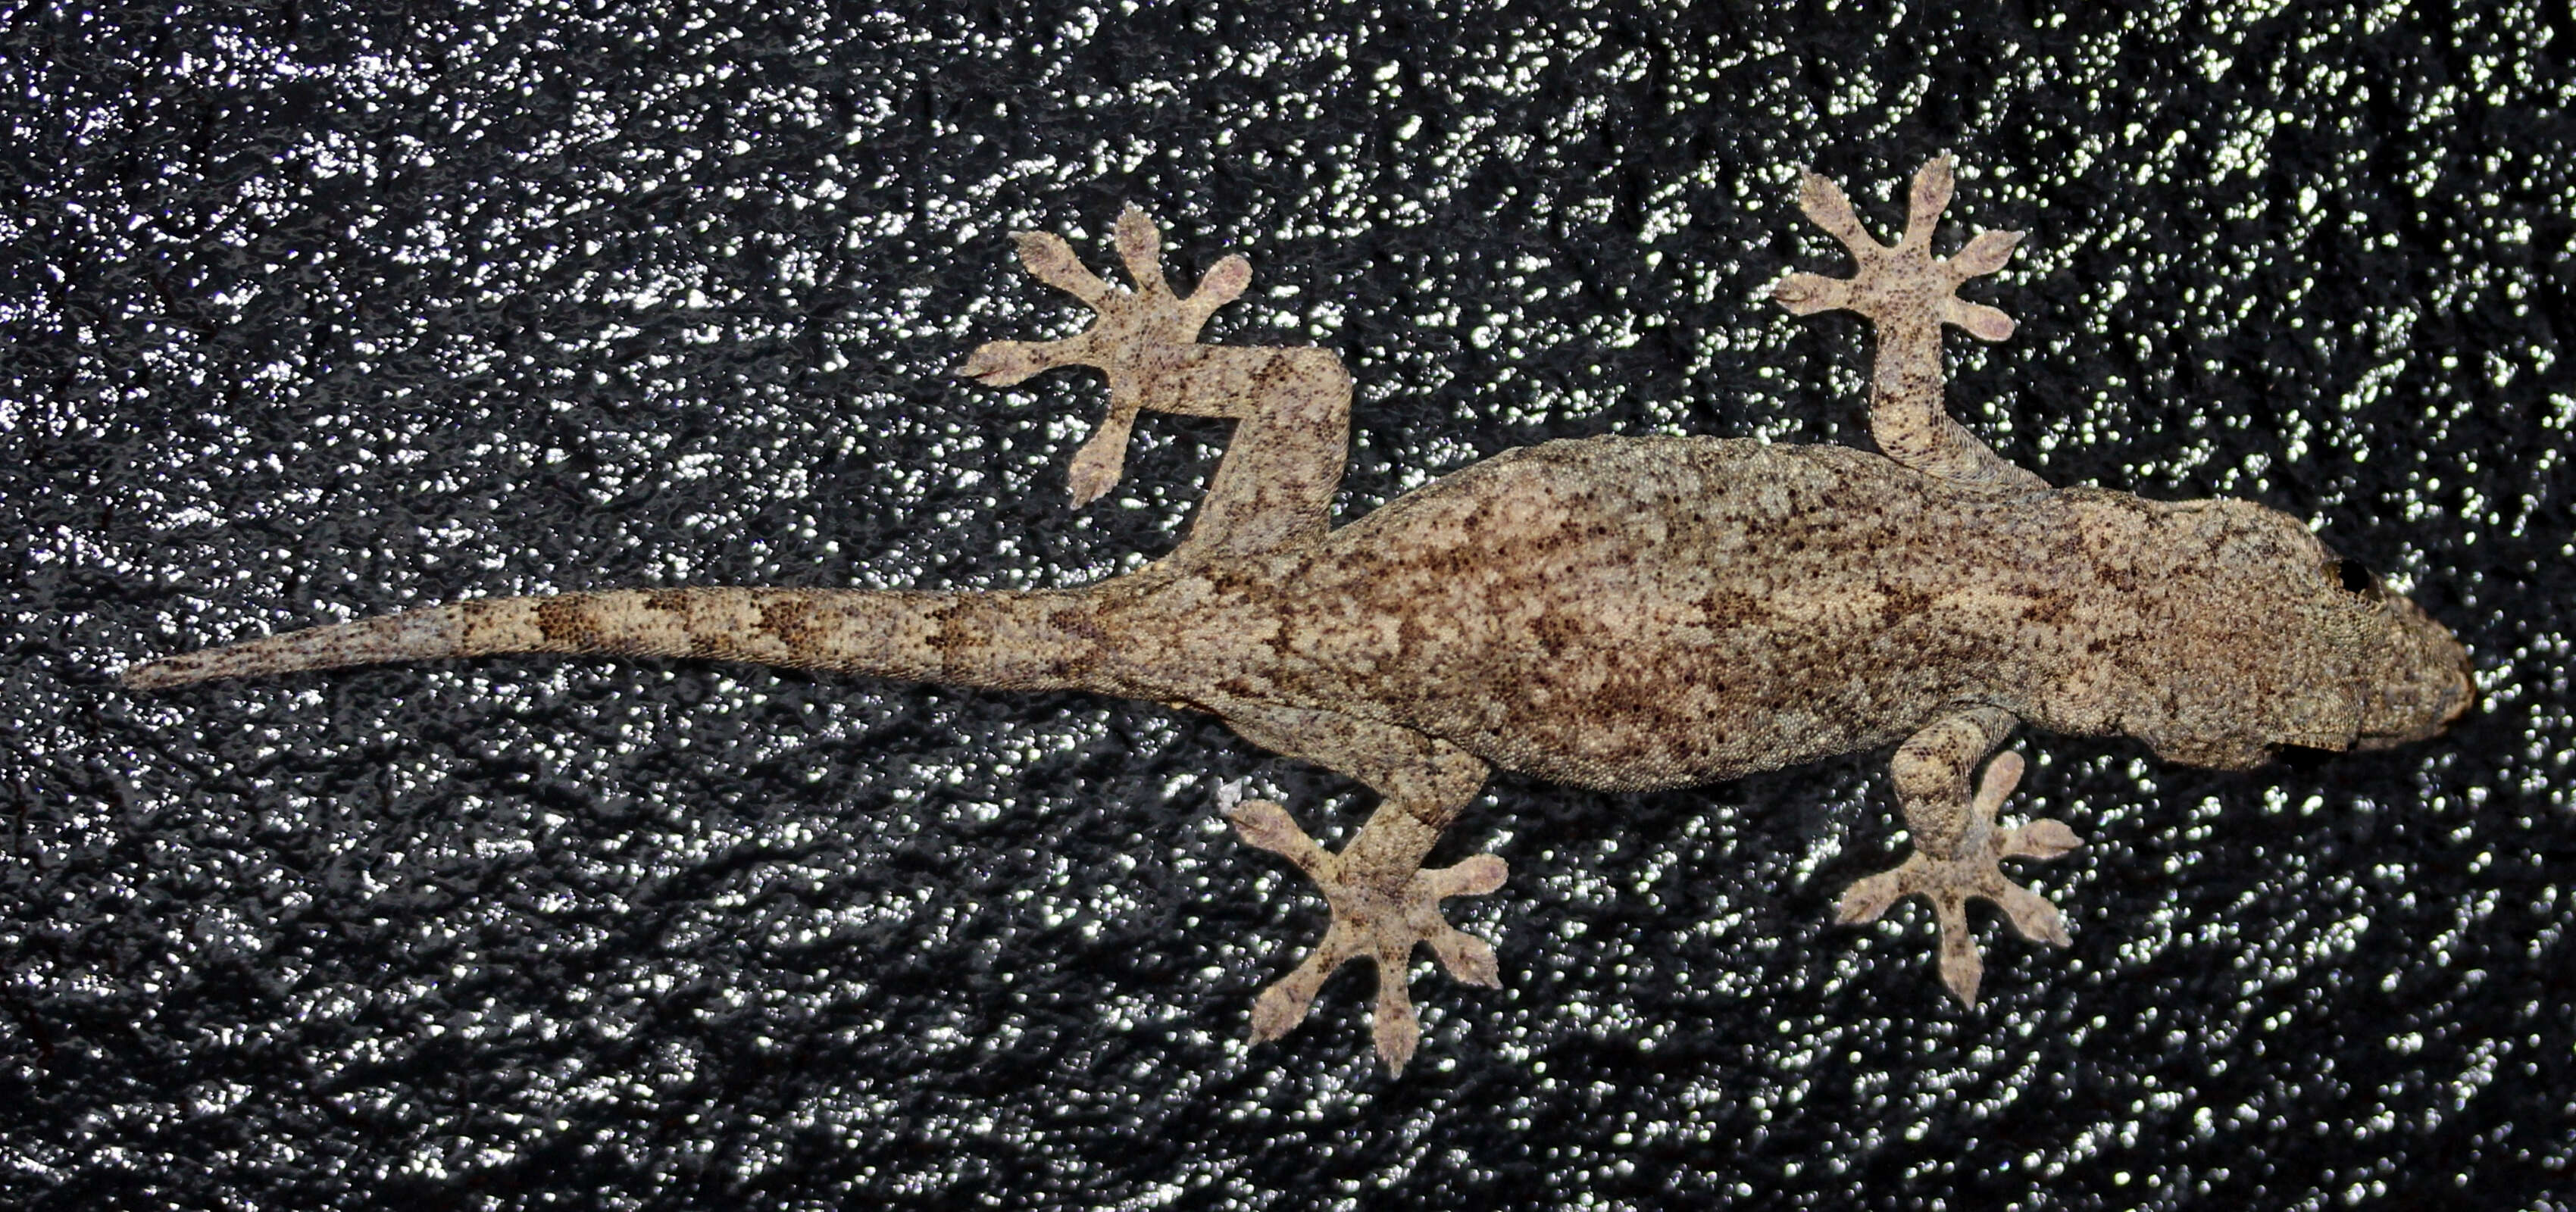 Image of Schlegel's Japanese Gecko